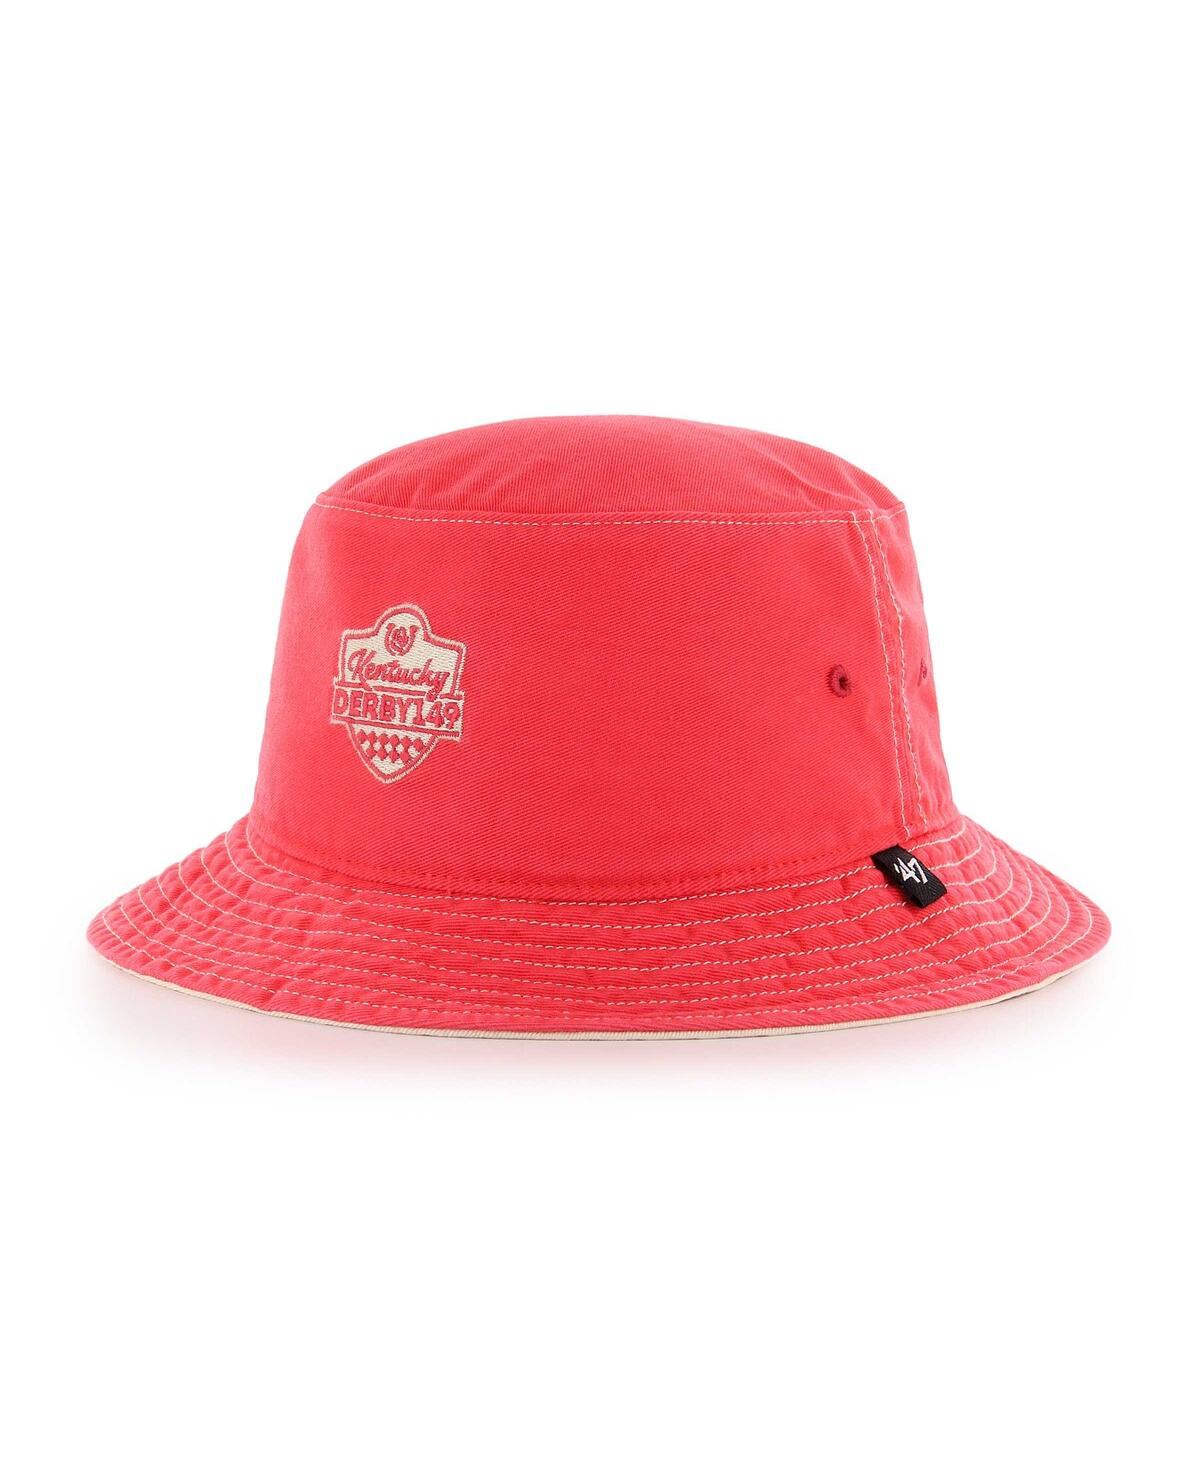 Men's '47 Brand Red Kentucky Derby 149 Trailhead Bucket Hat - Red